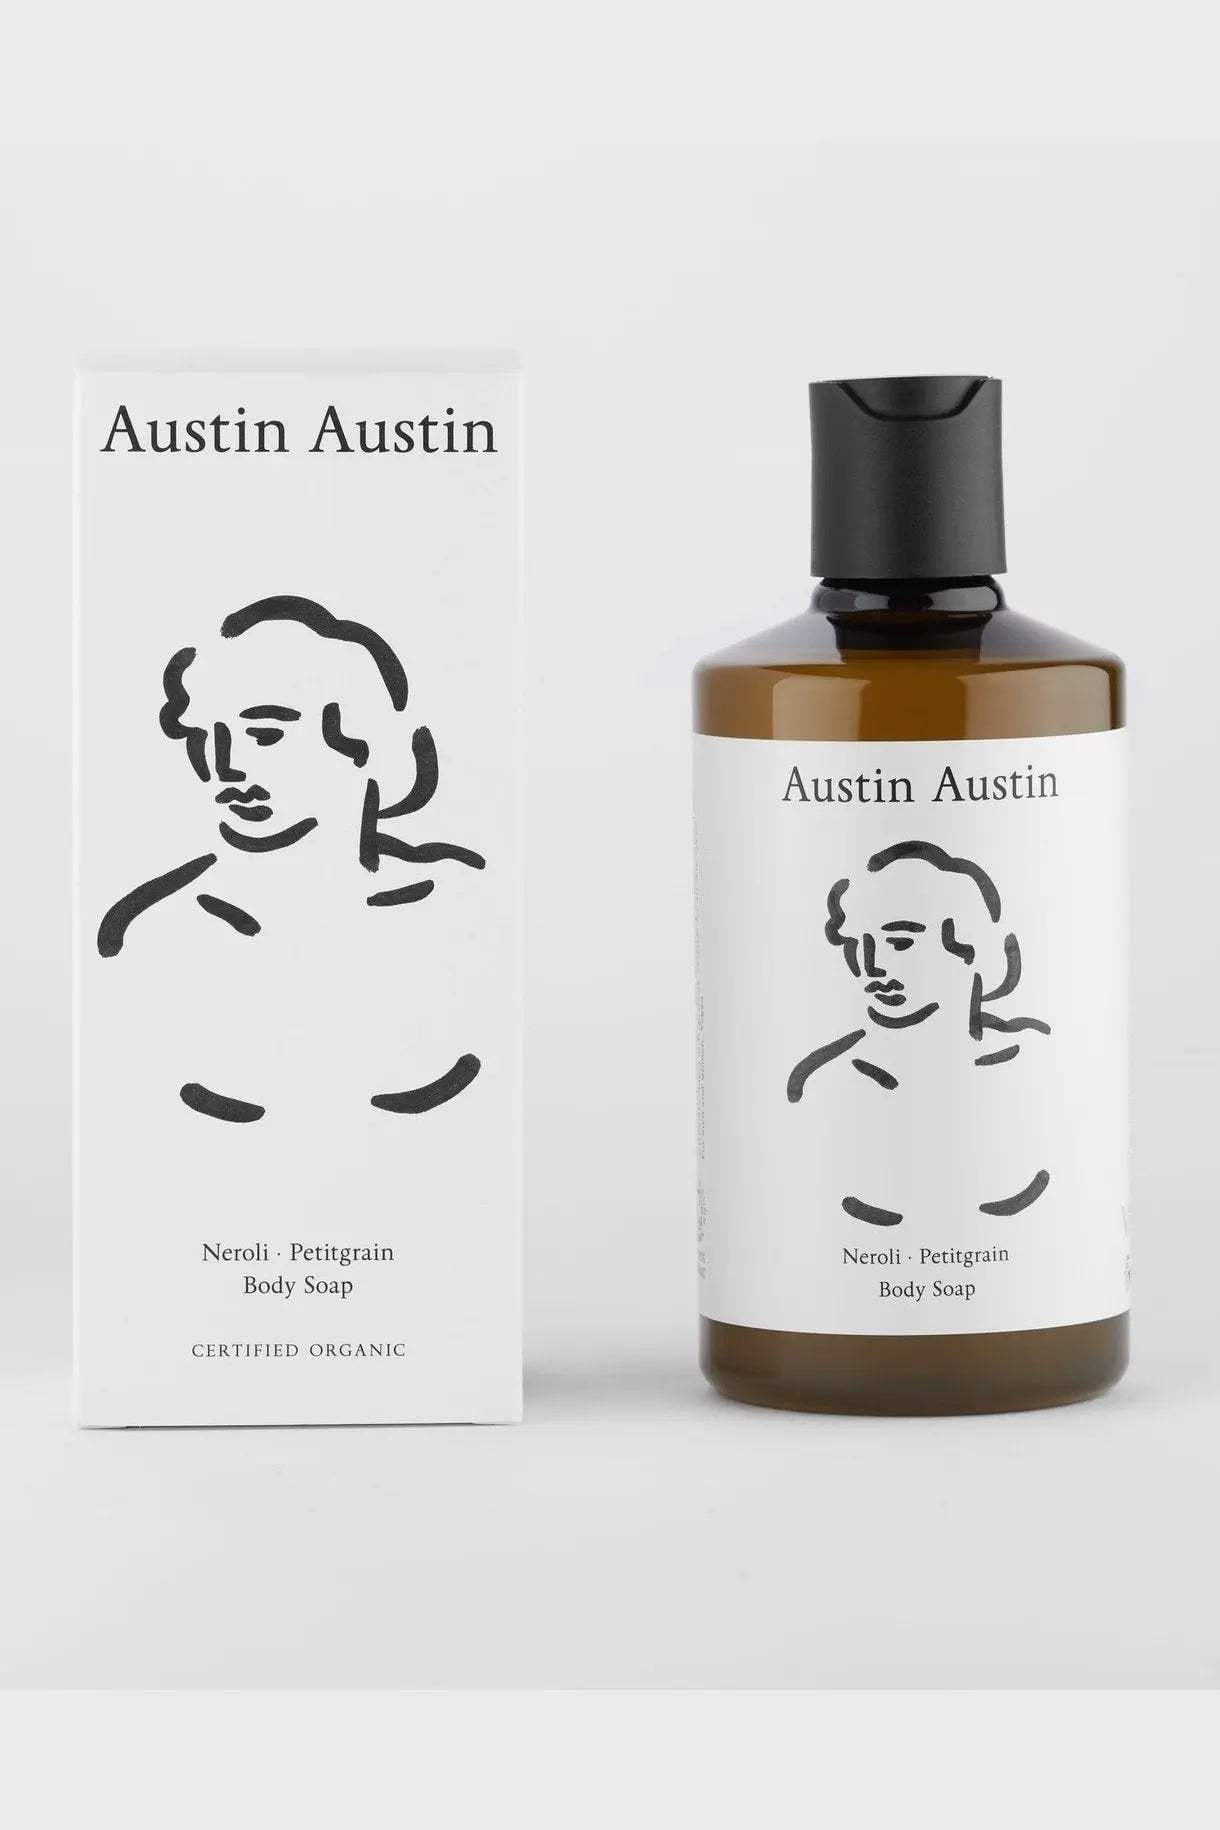 Organic Neroli & Petitgrain Body Soap, Citrus Top Notes, Handcrafted Soap  Austin Austin   